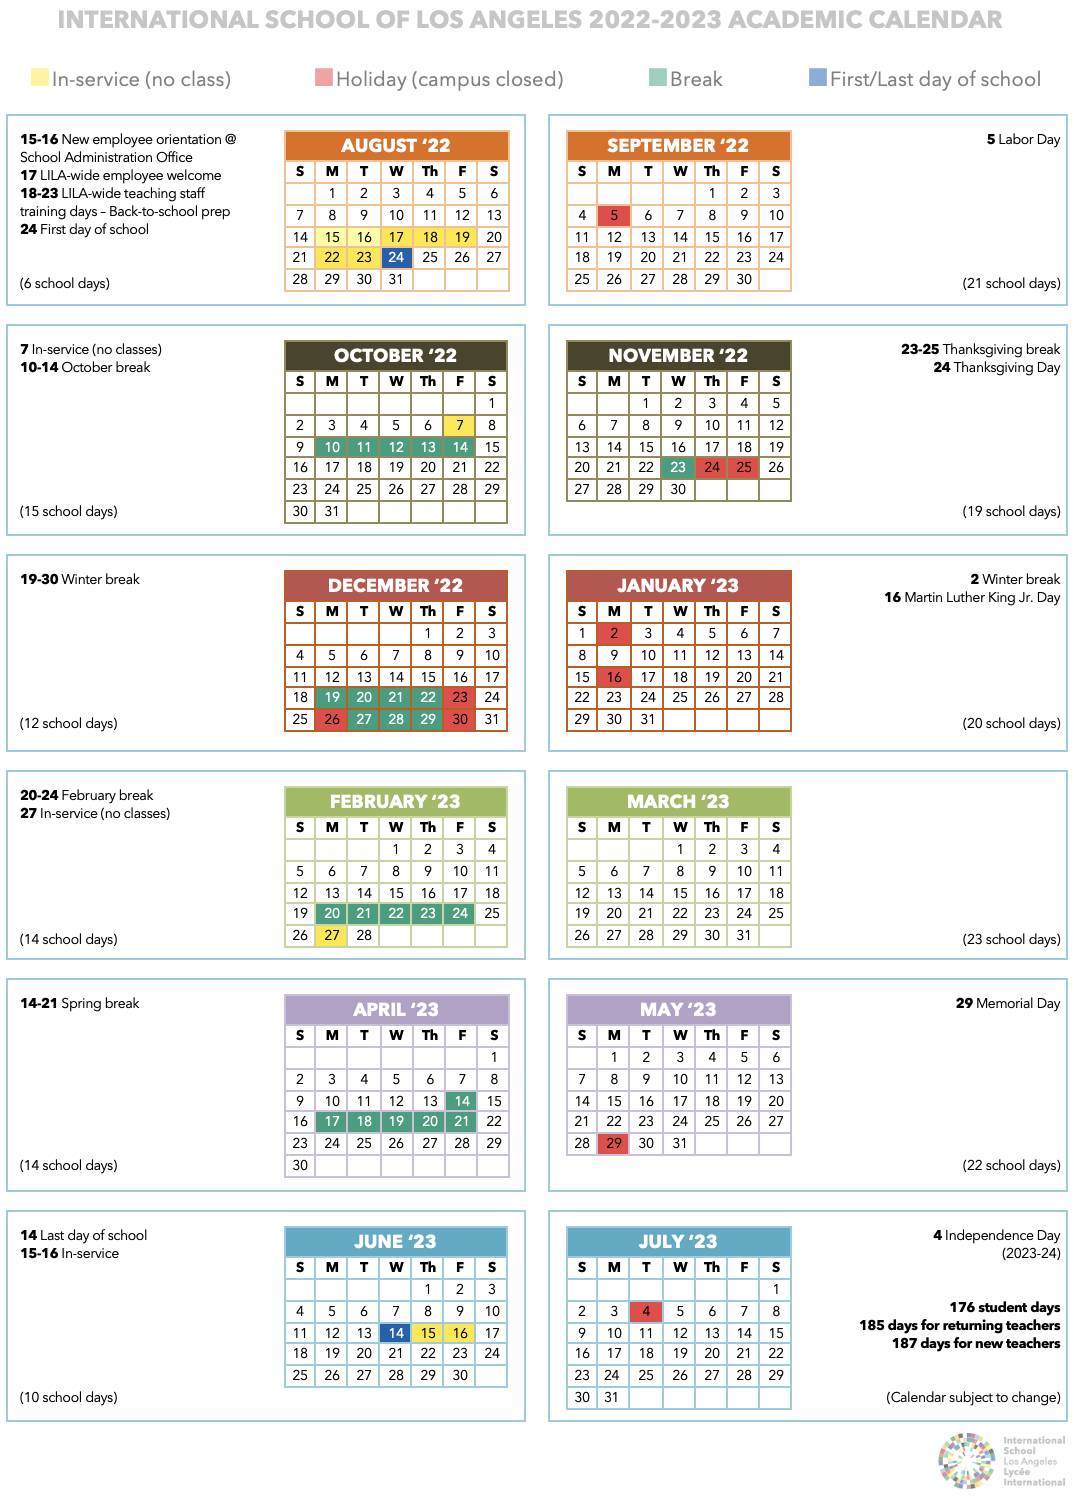 Csuf 2022 Calendar Calendar | International School Of Los Angeles